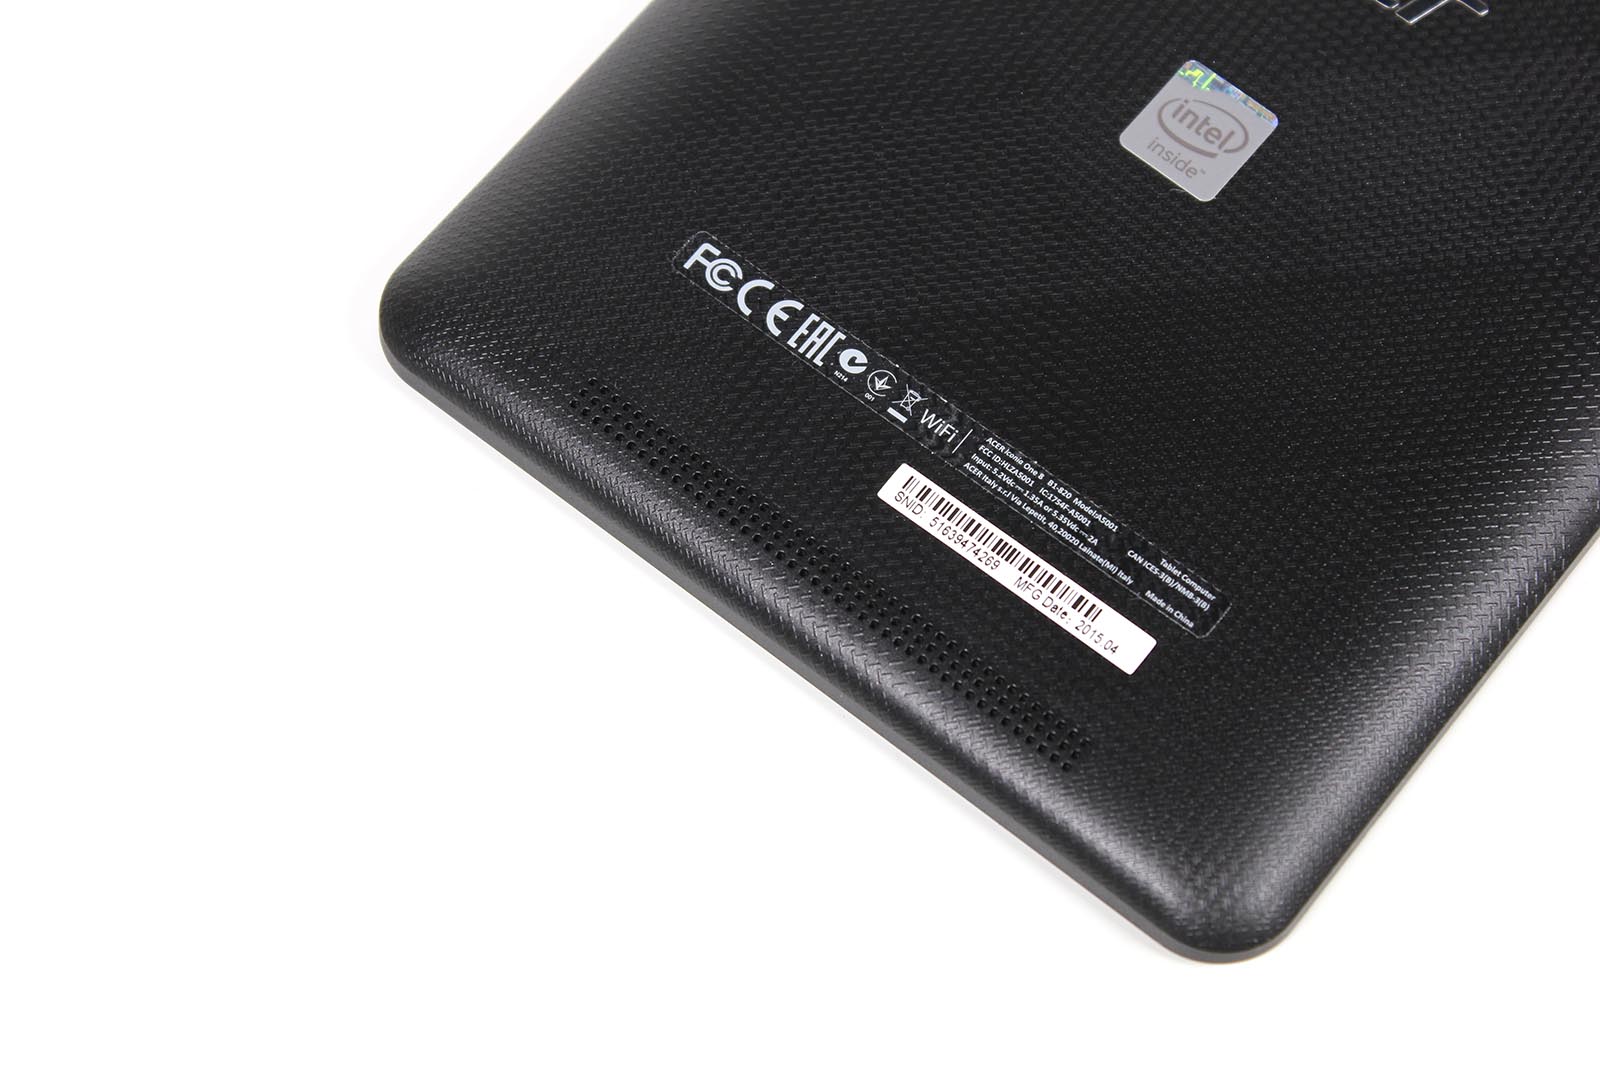 Acer Iconia One 8 - Unterseite